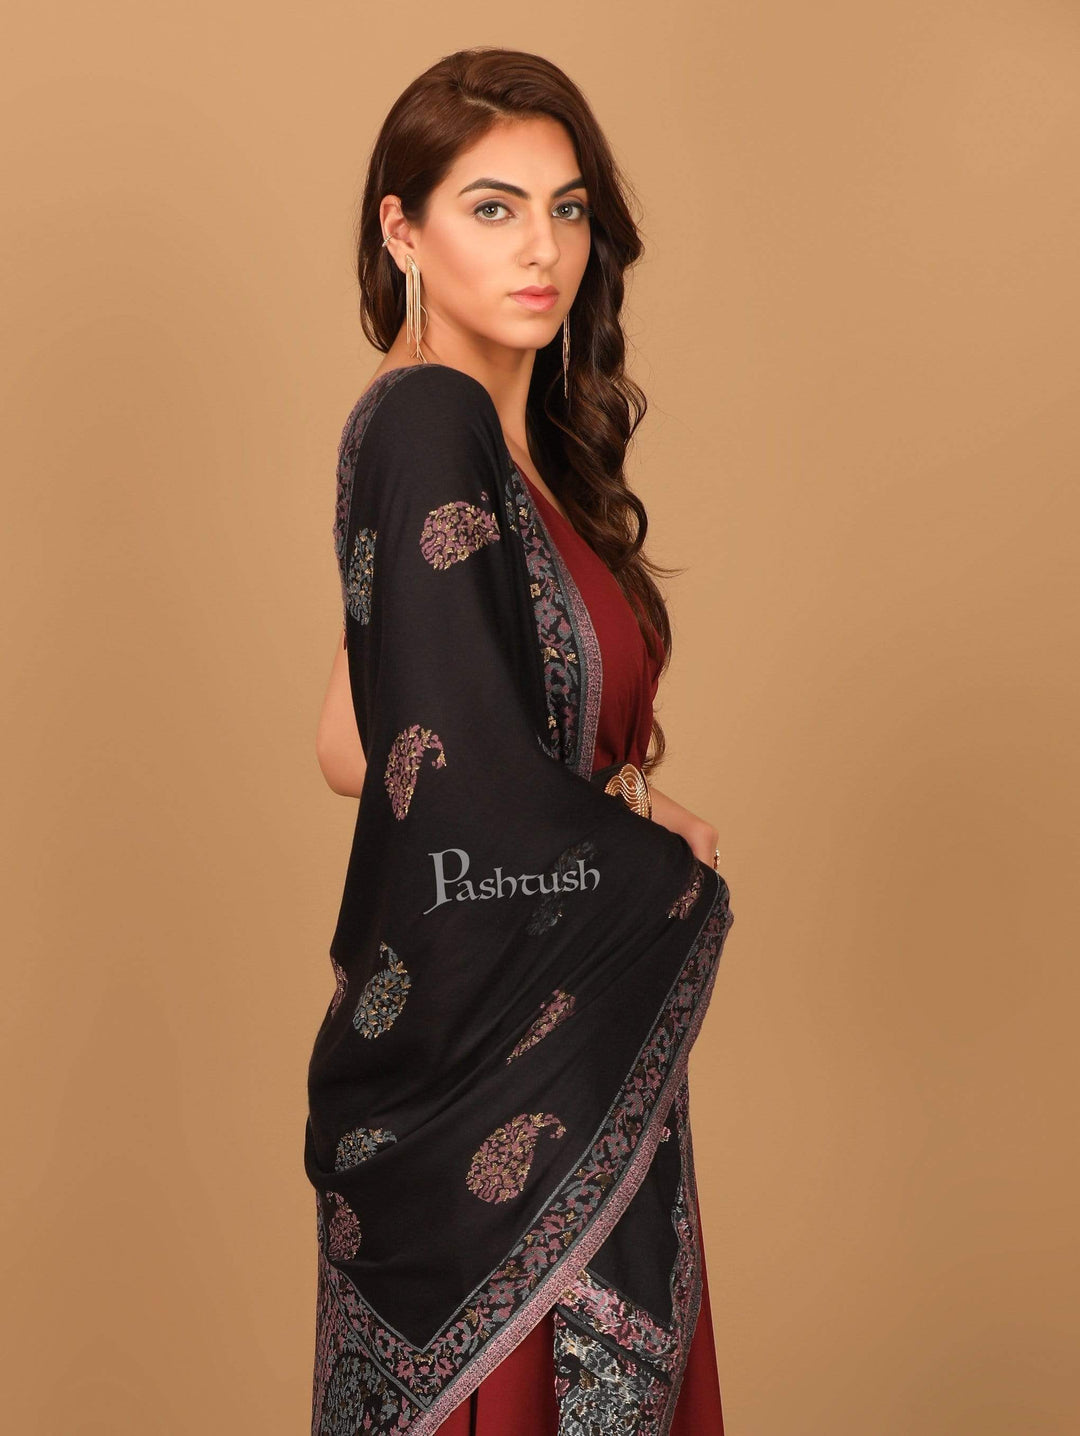 Pashtush India 70x200 Pashtush Women's Paisley Design, Soft Bamboo Scarf, Golden Zari Thread Weave